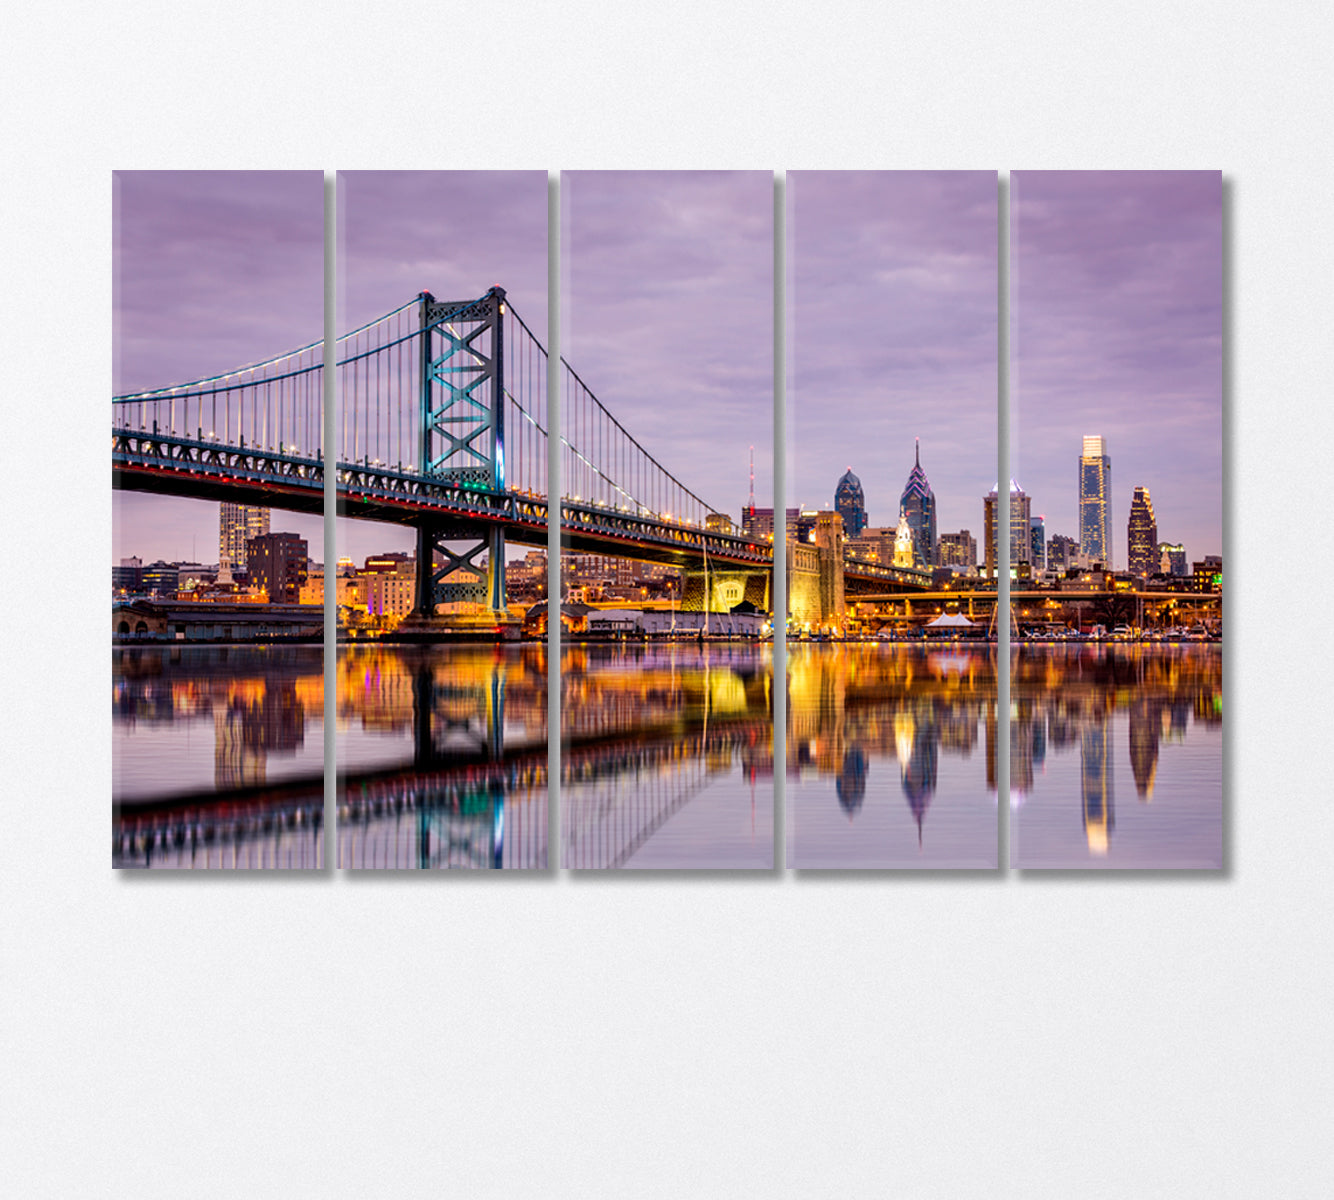 Ben Franklin Bridge and Philadelphia Skyline Canvas Print-Canvas Print-CetArt-5 Panels-36x24 inches-CetArt